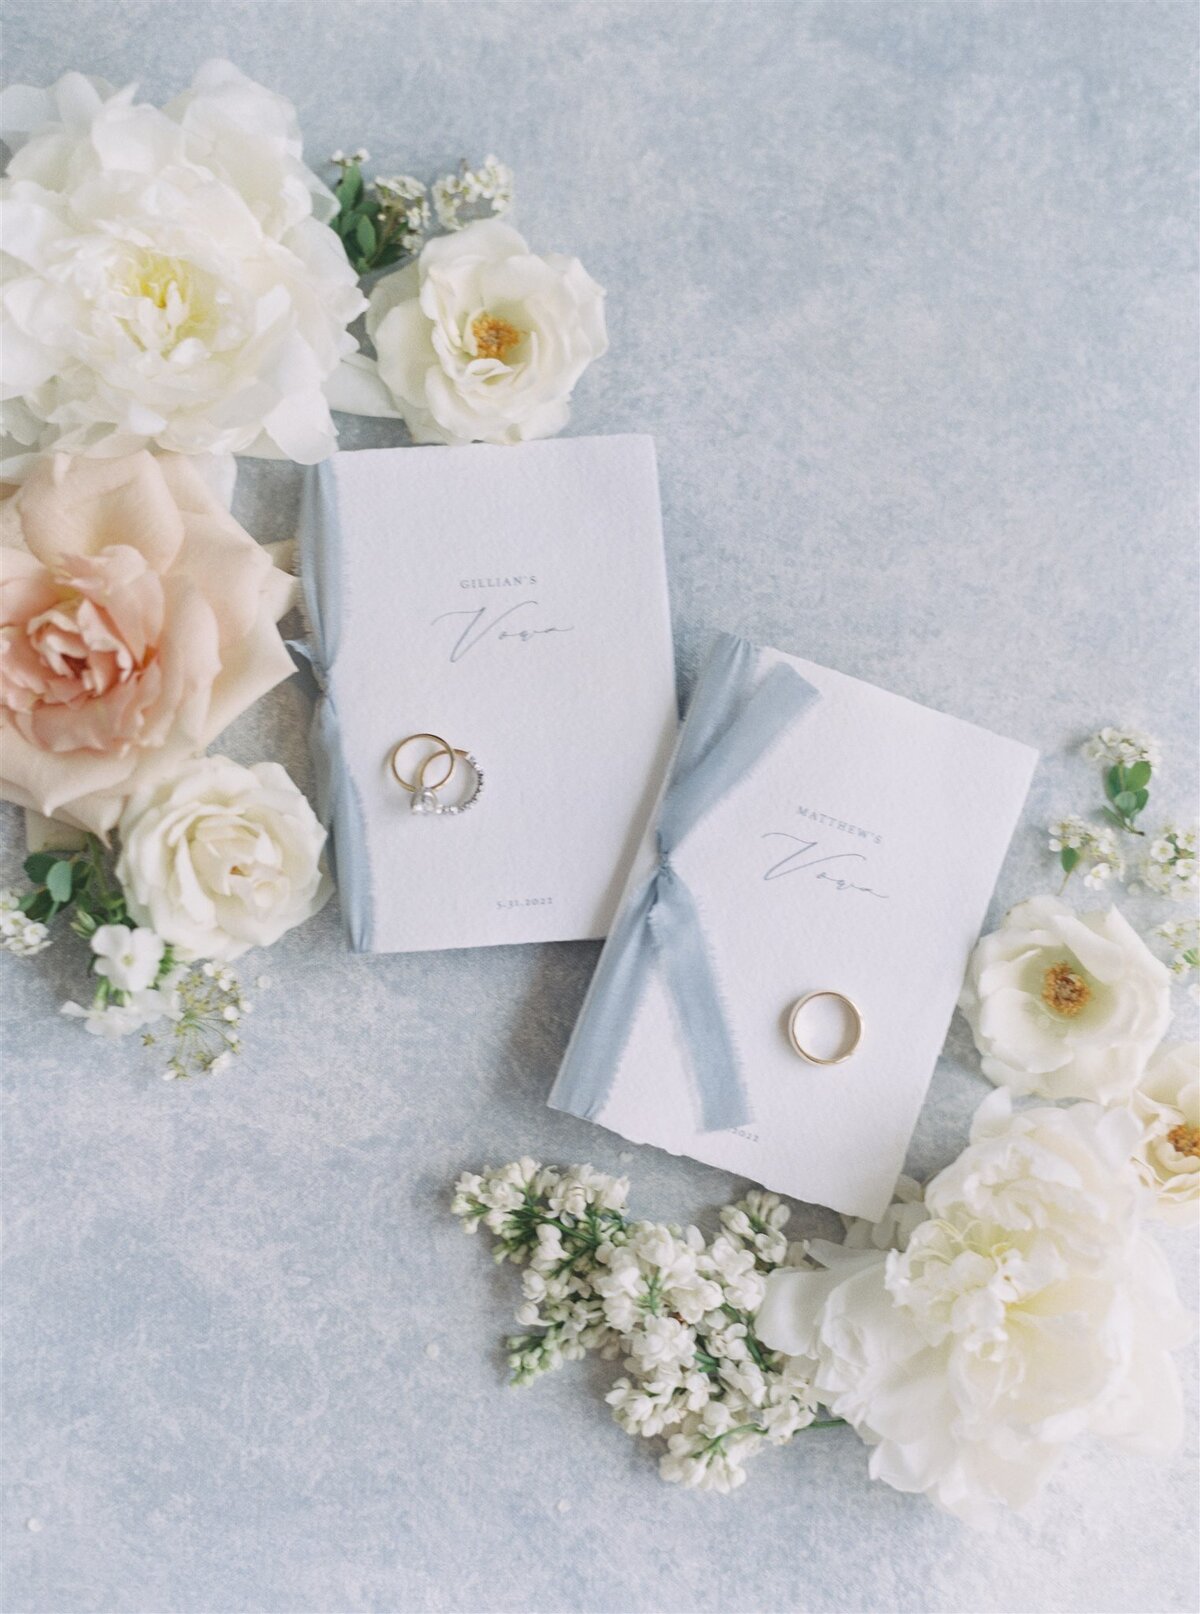 Kate-Murtaugh-Events-Newport-RI-letterpress-vow-book-wedding-rings-event-planner-florals